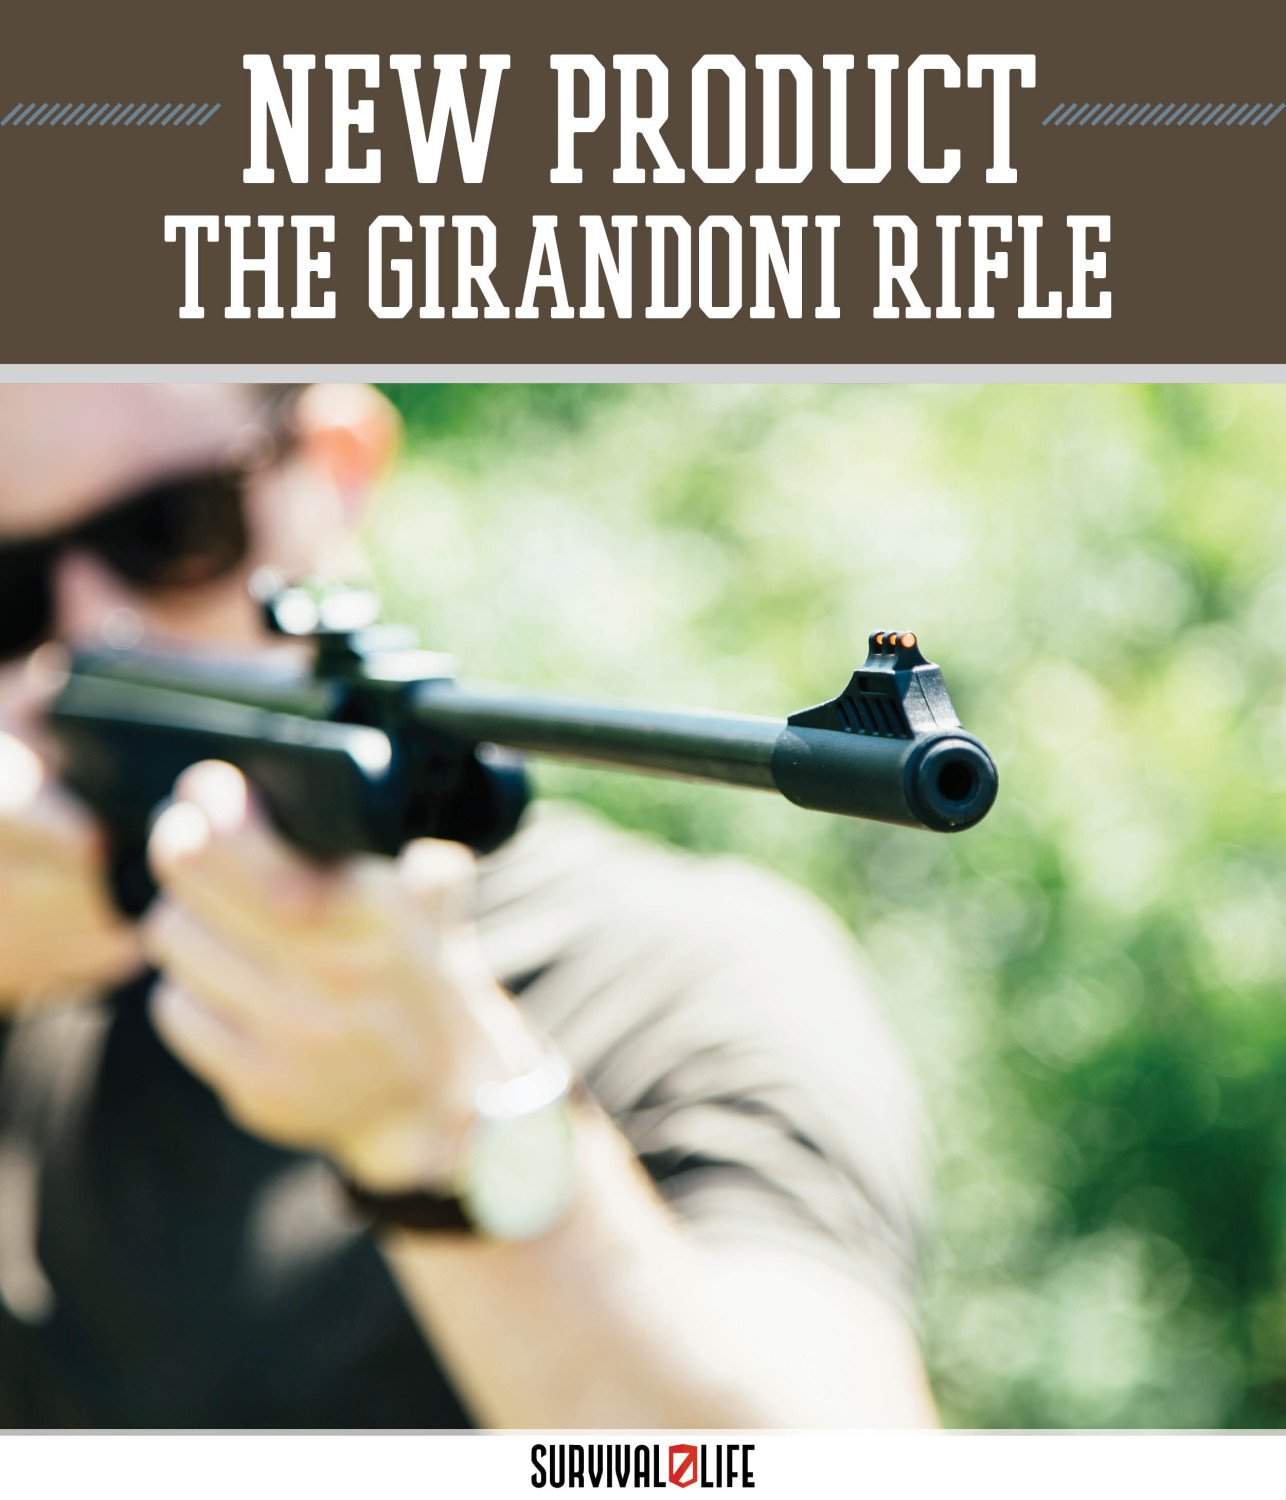 Exclusive SL Air Gun for Sale: The Girandoni Rifle by Survival Life http://survivallife.staging.wpengine.com/2015/06/14/girandoni-rifle